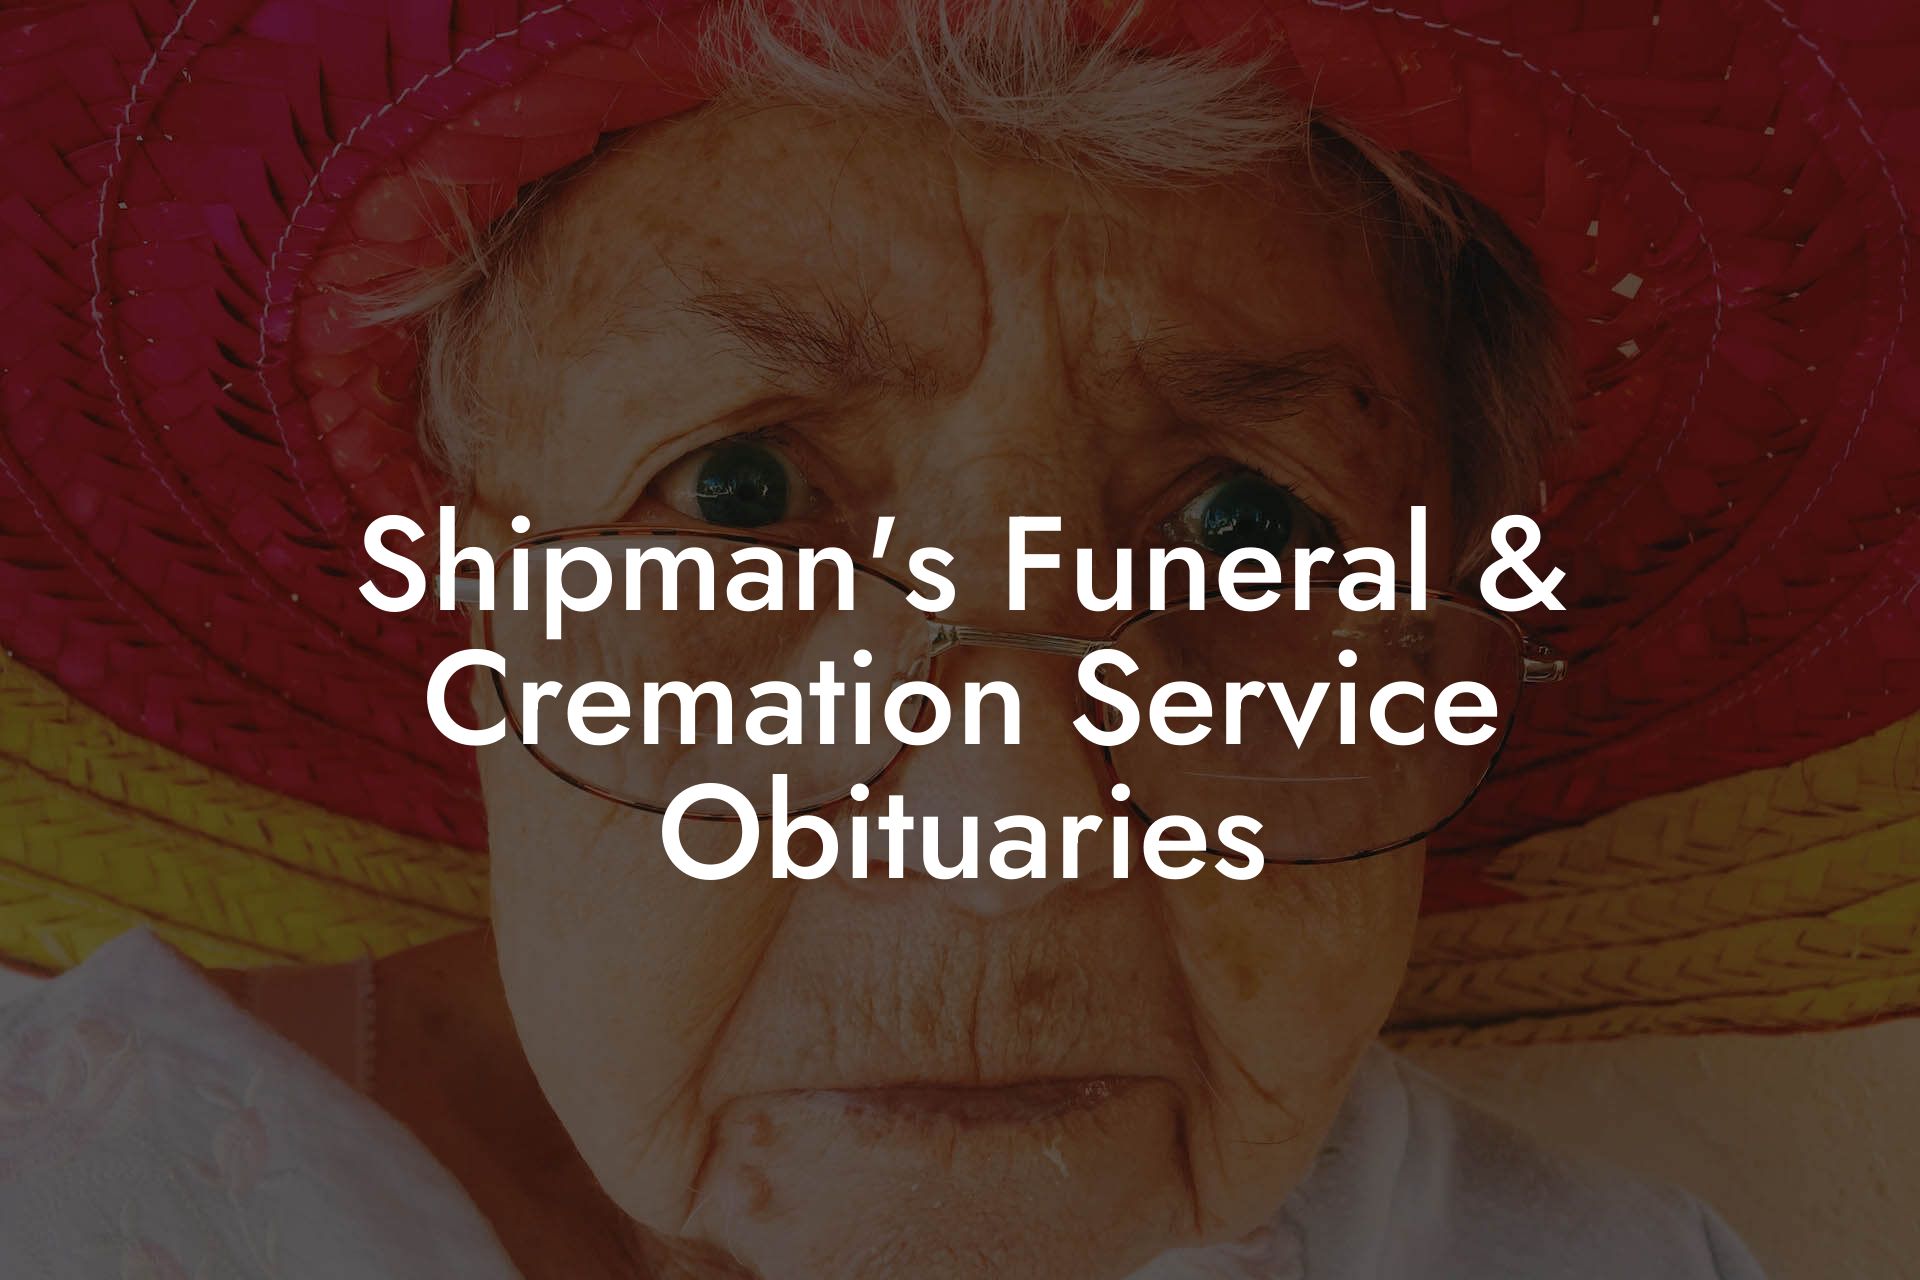 Shipman's Funeral & Cremation Service Obituaries